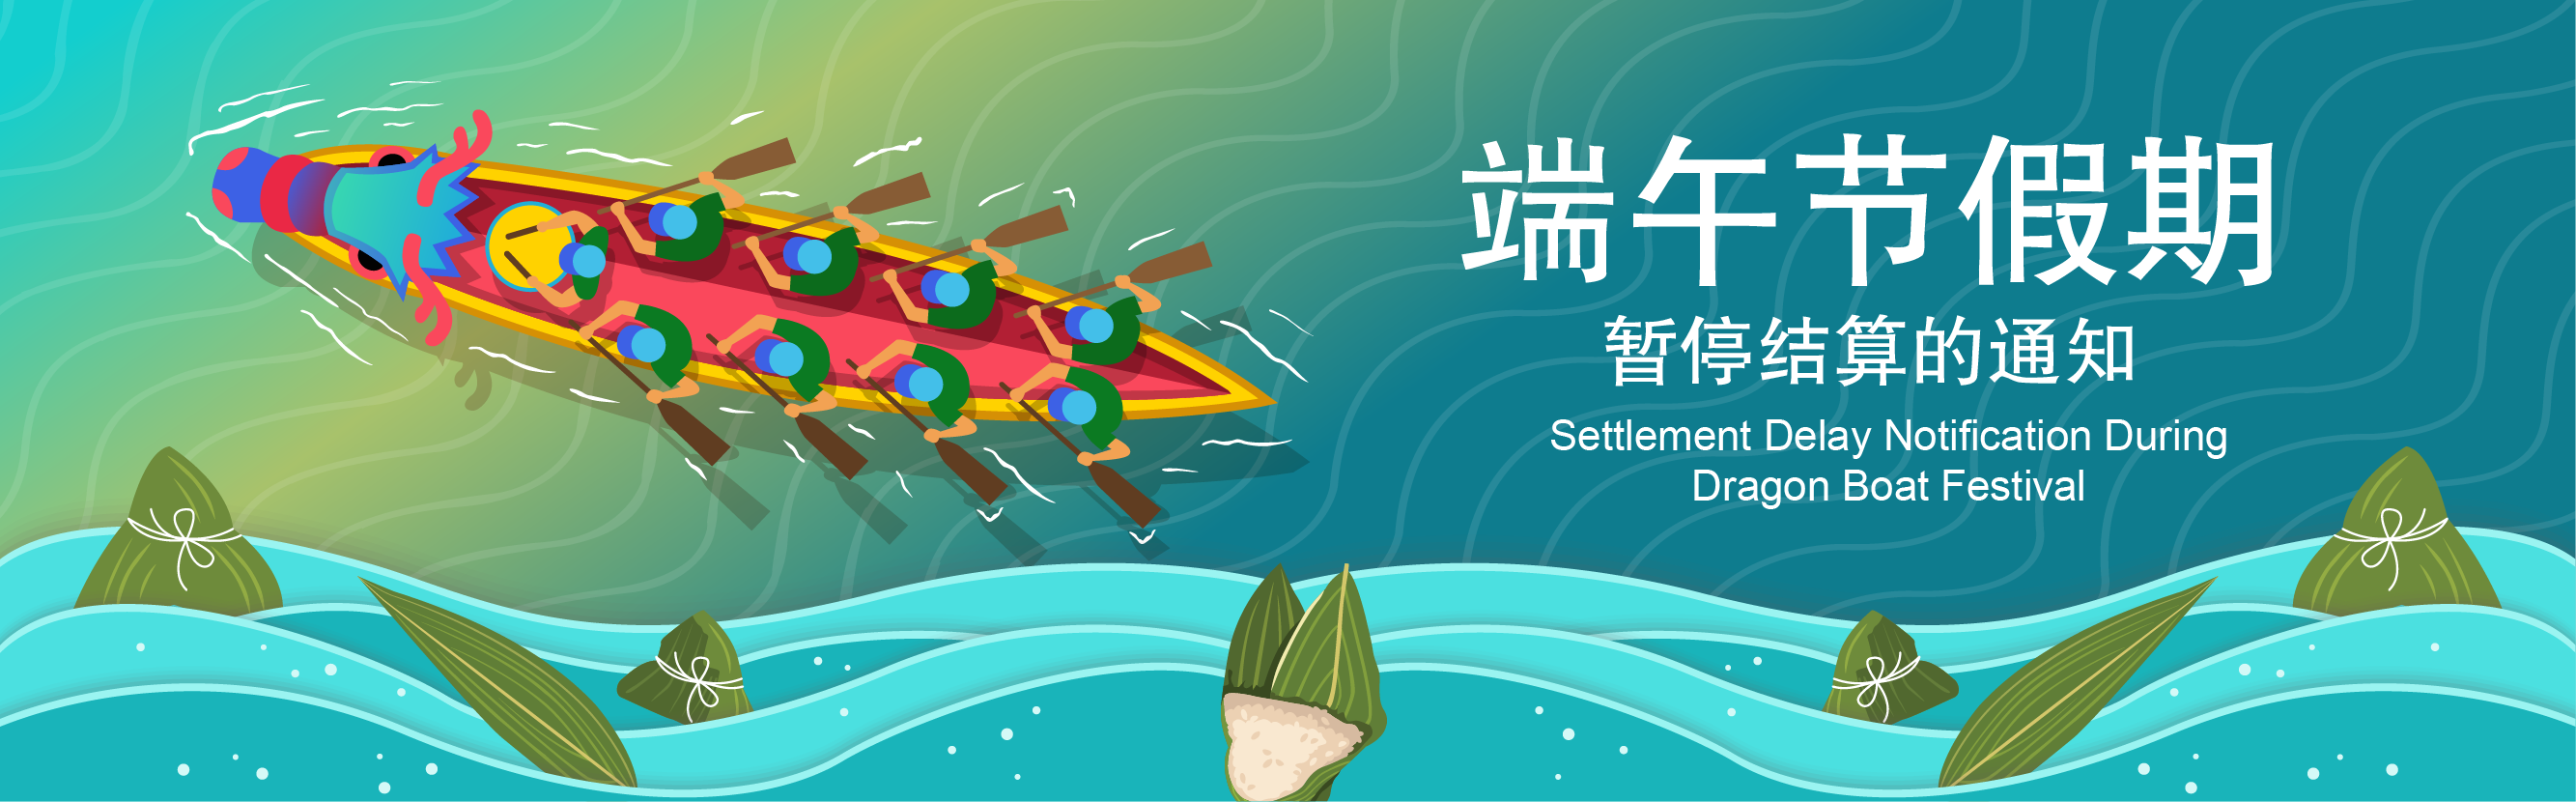 Settlement Delay Notification during Dragon Boat Festival in China 关于2021年中国端午节假期暂停结算的通知